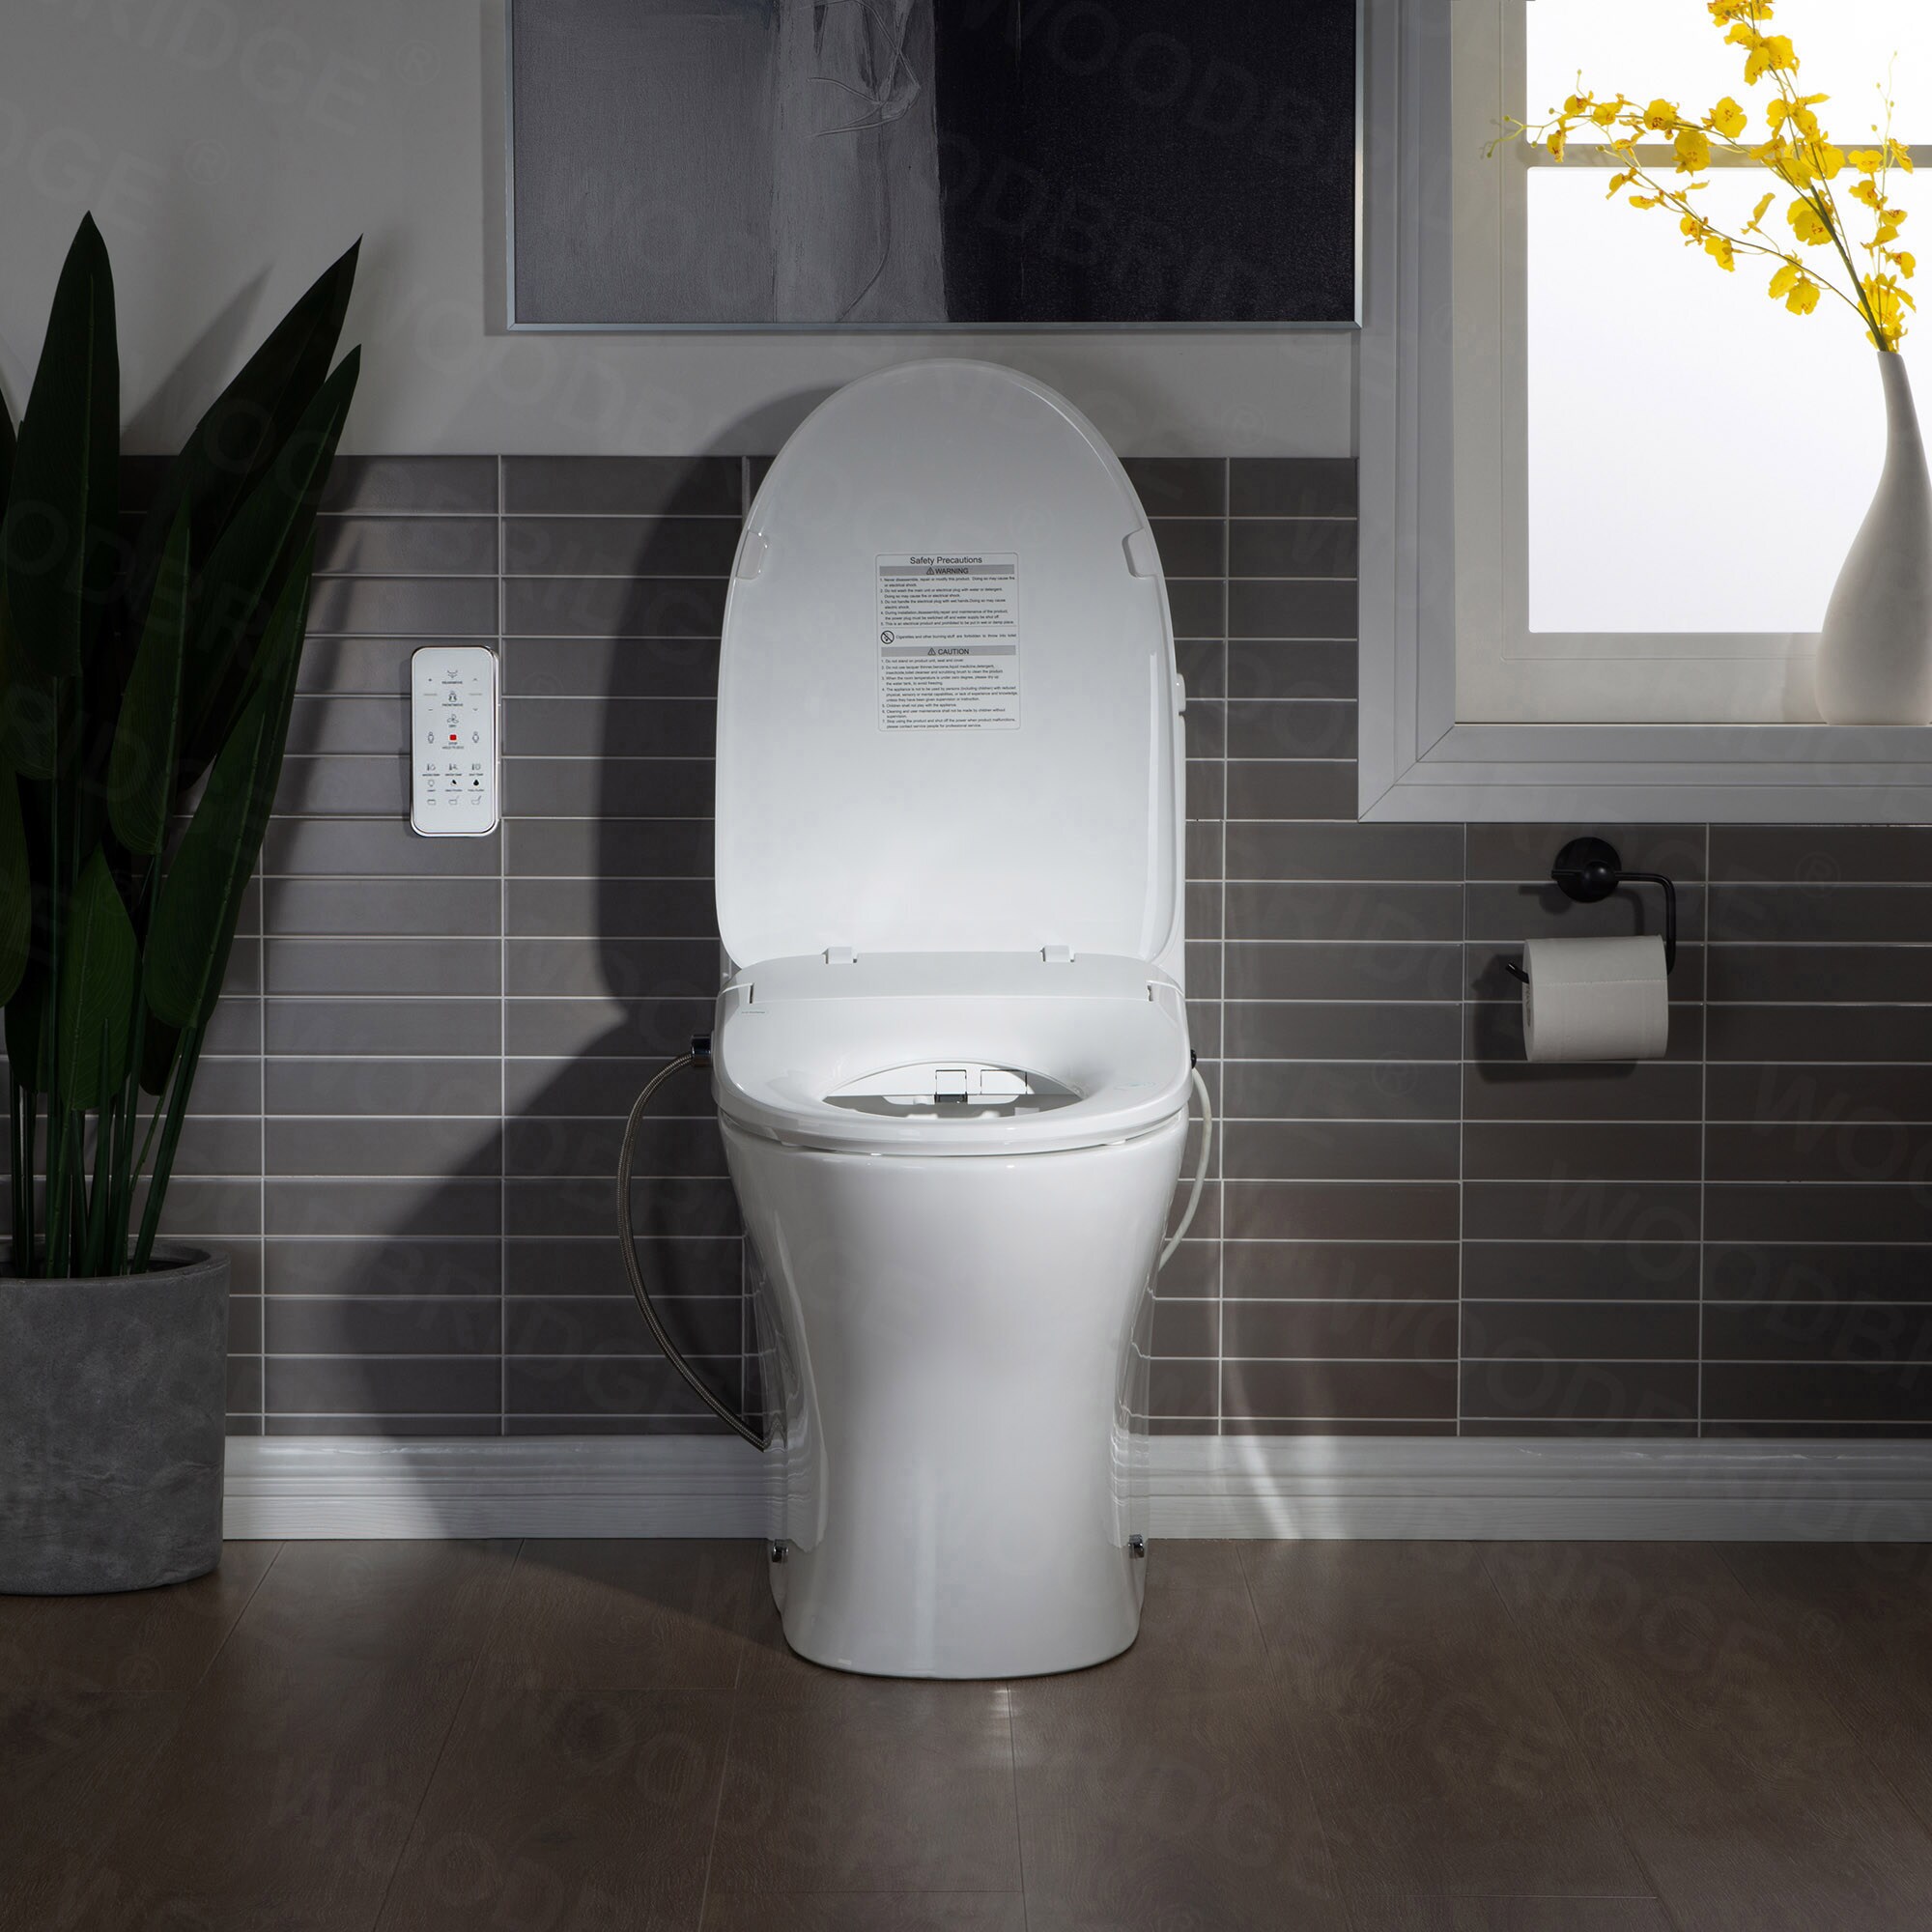 ᐅ【WOODBRIDGE T-0041 Elongated one Piece toilet with Smart Bidet